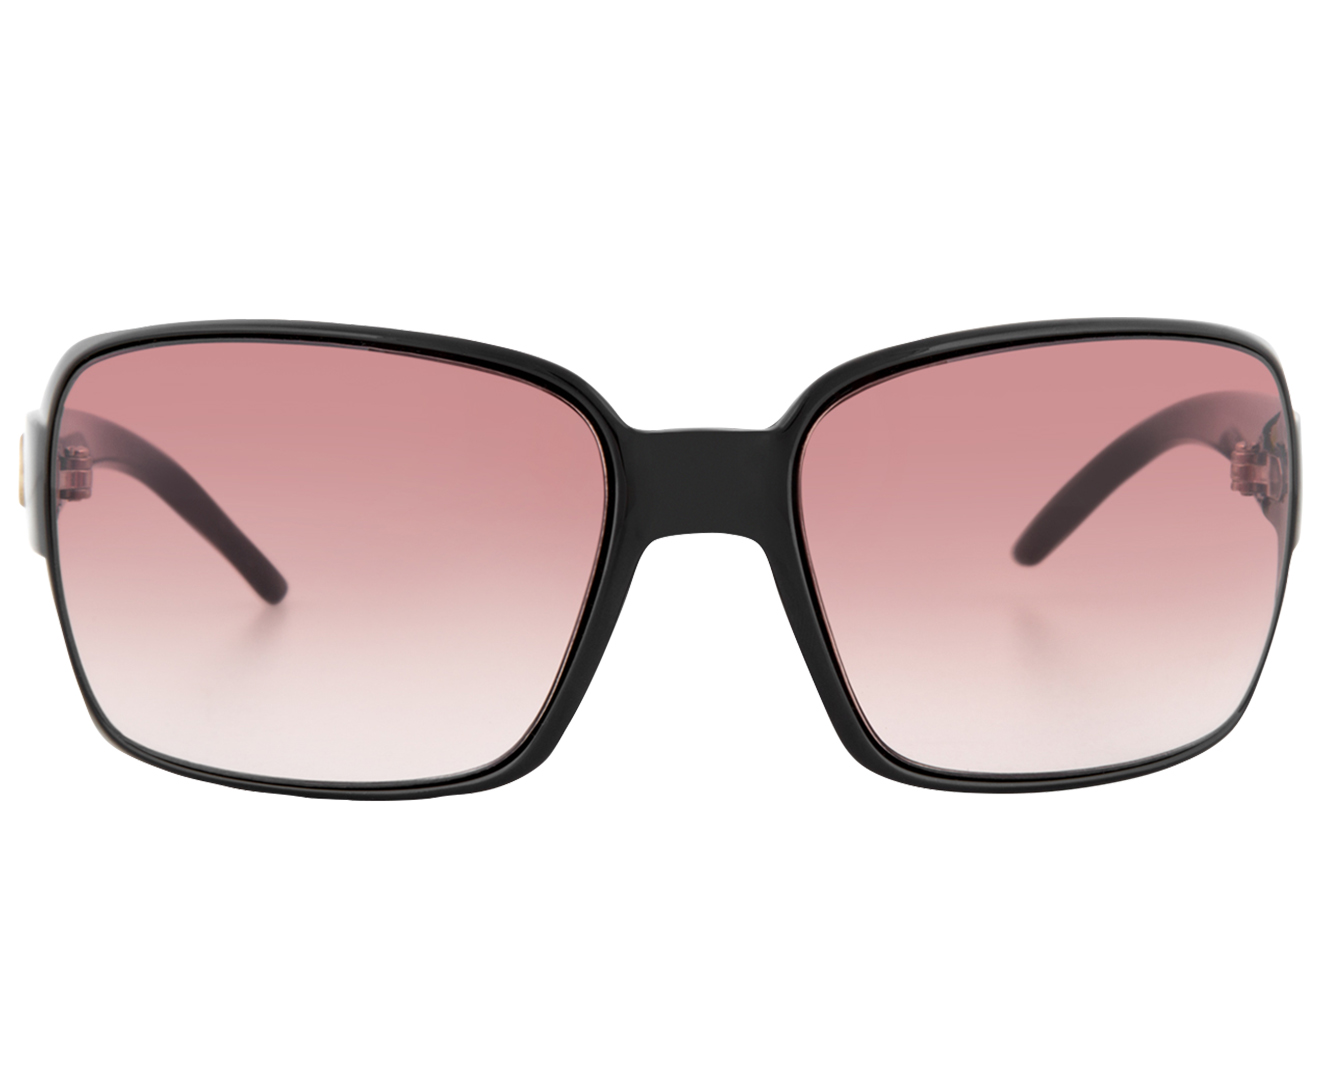 Fiorelli Catwalk Women's Mia Sunglasses - Black | Catch.com.au